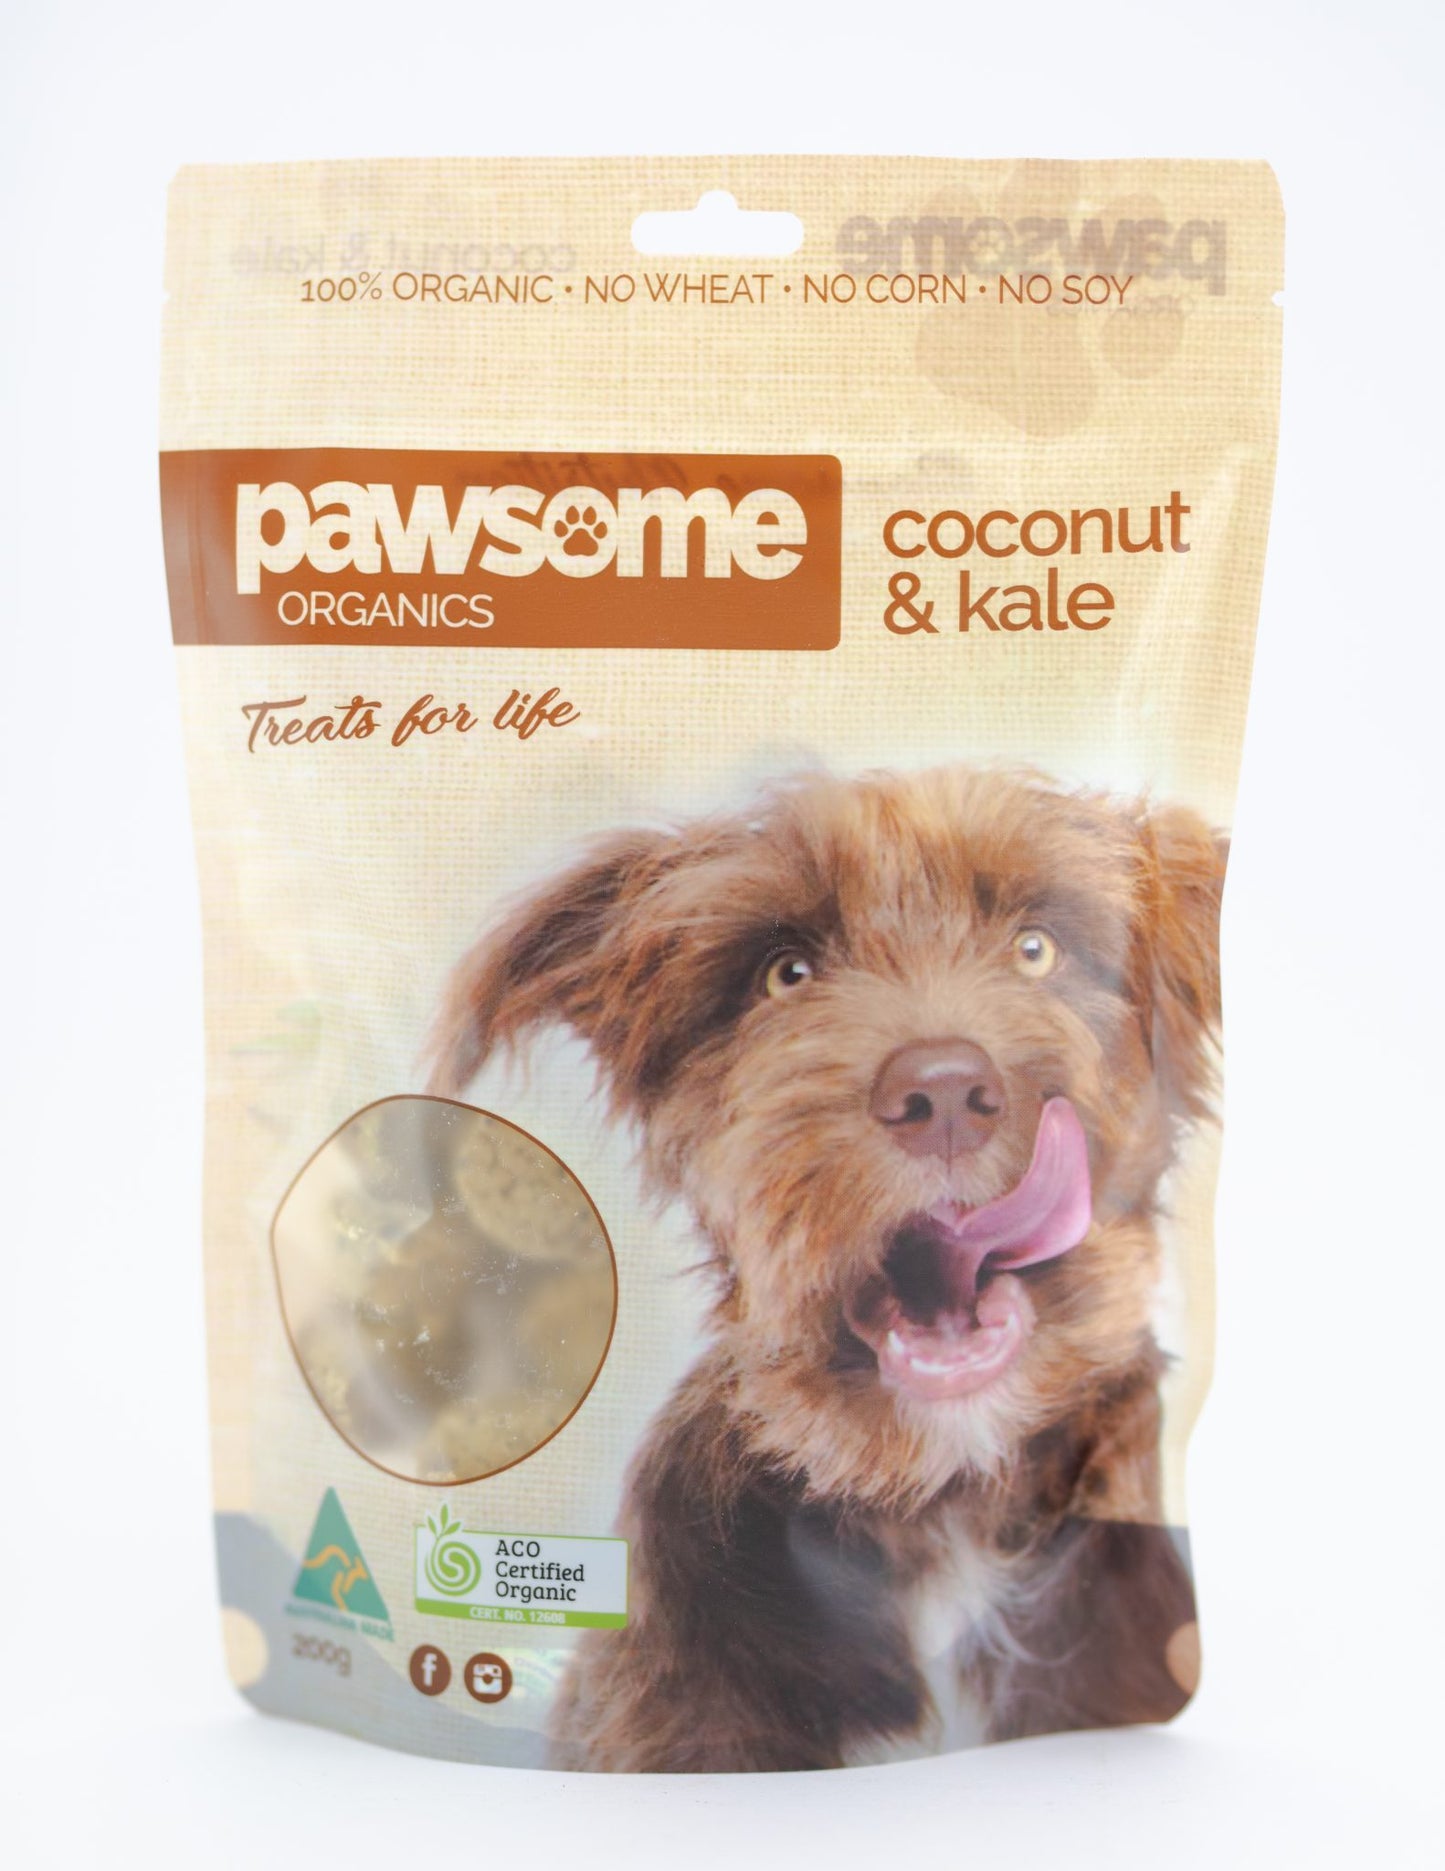 Pawsome Organics - Coconut & Kale Treats